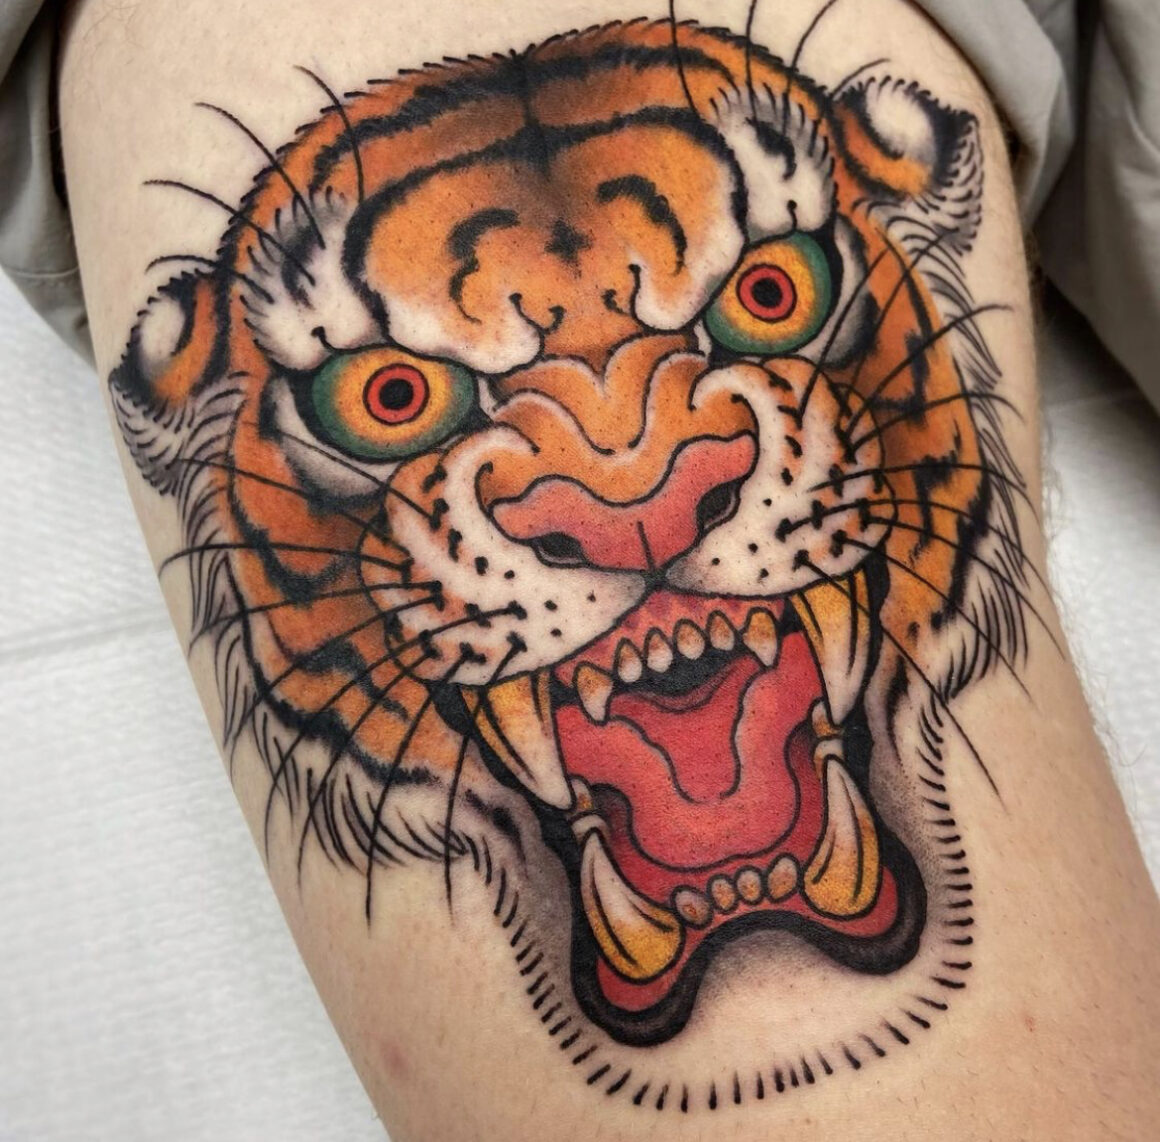 Graham Beech, Made To Last Tattoo, Charlotte, USA